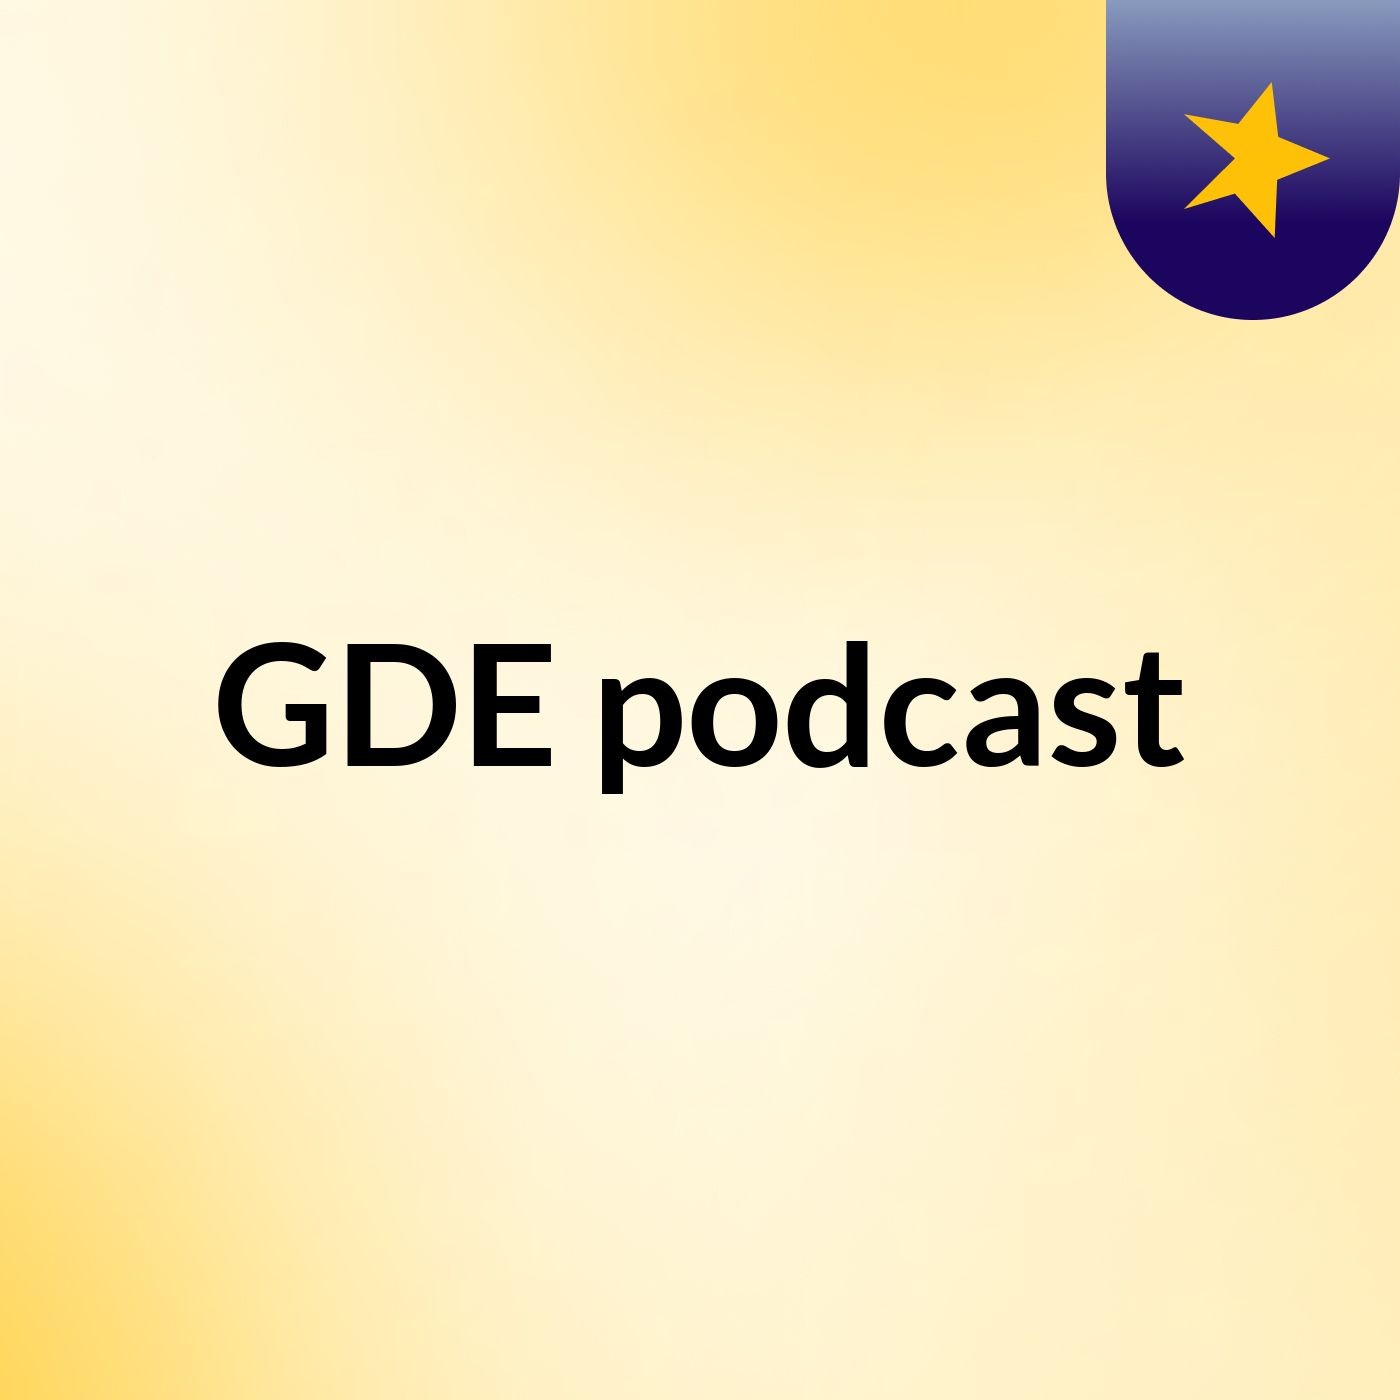 GDE podcast